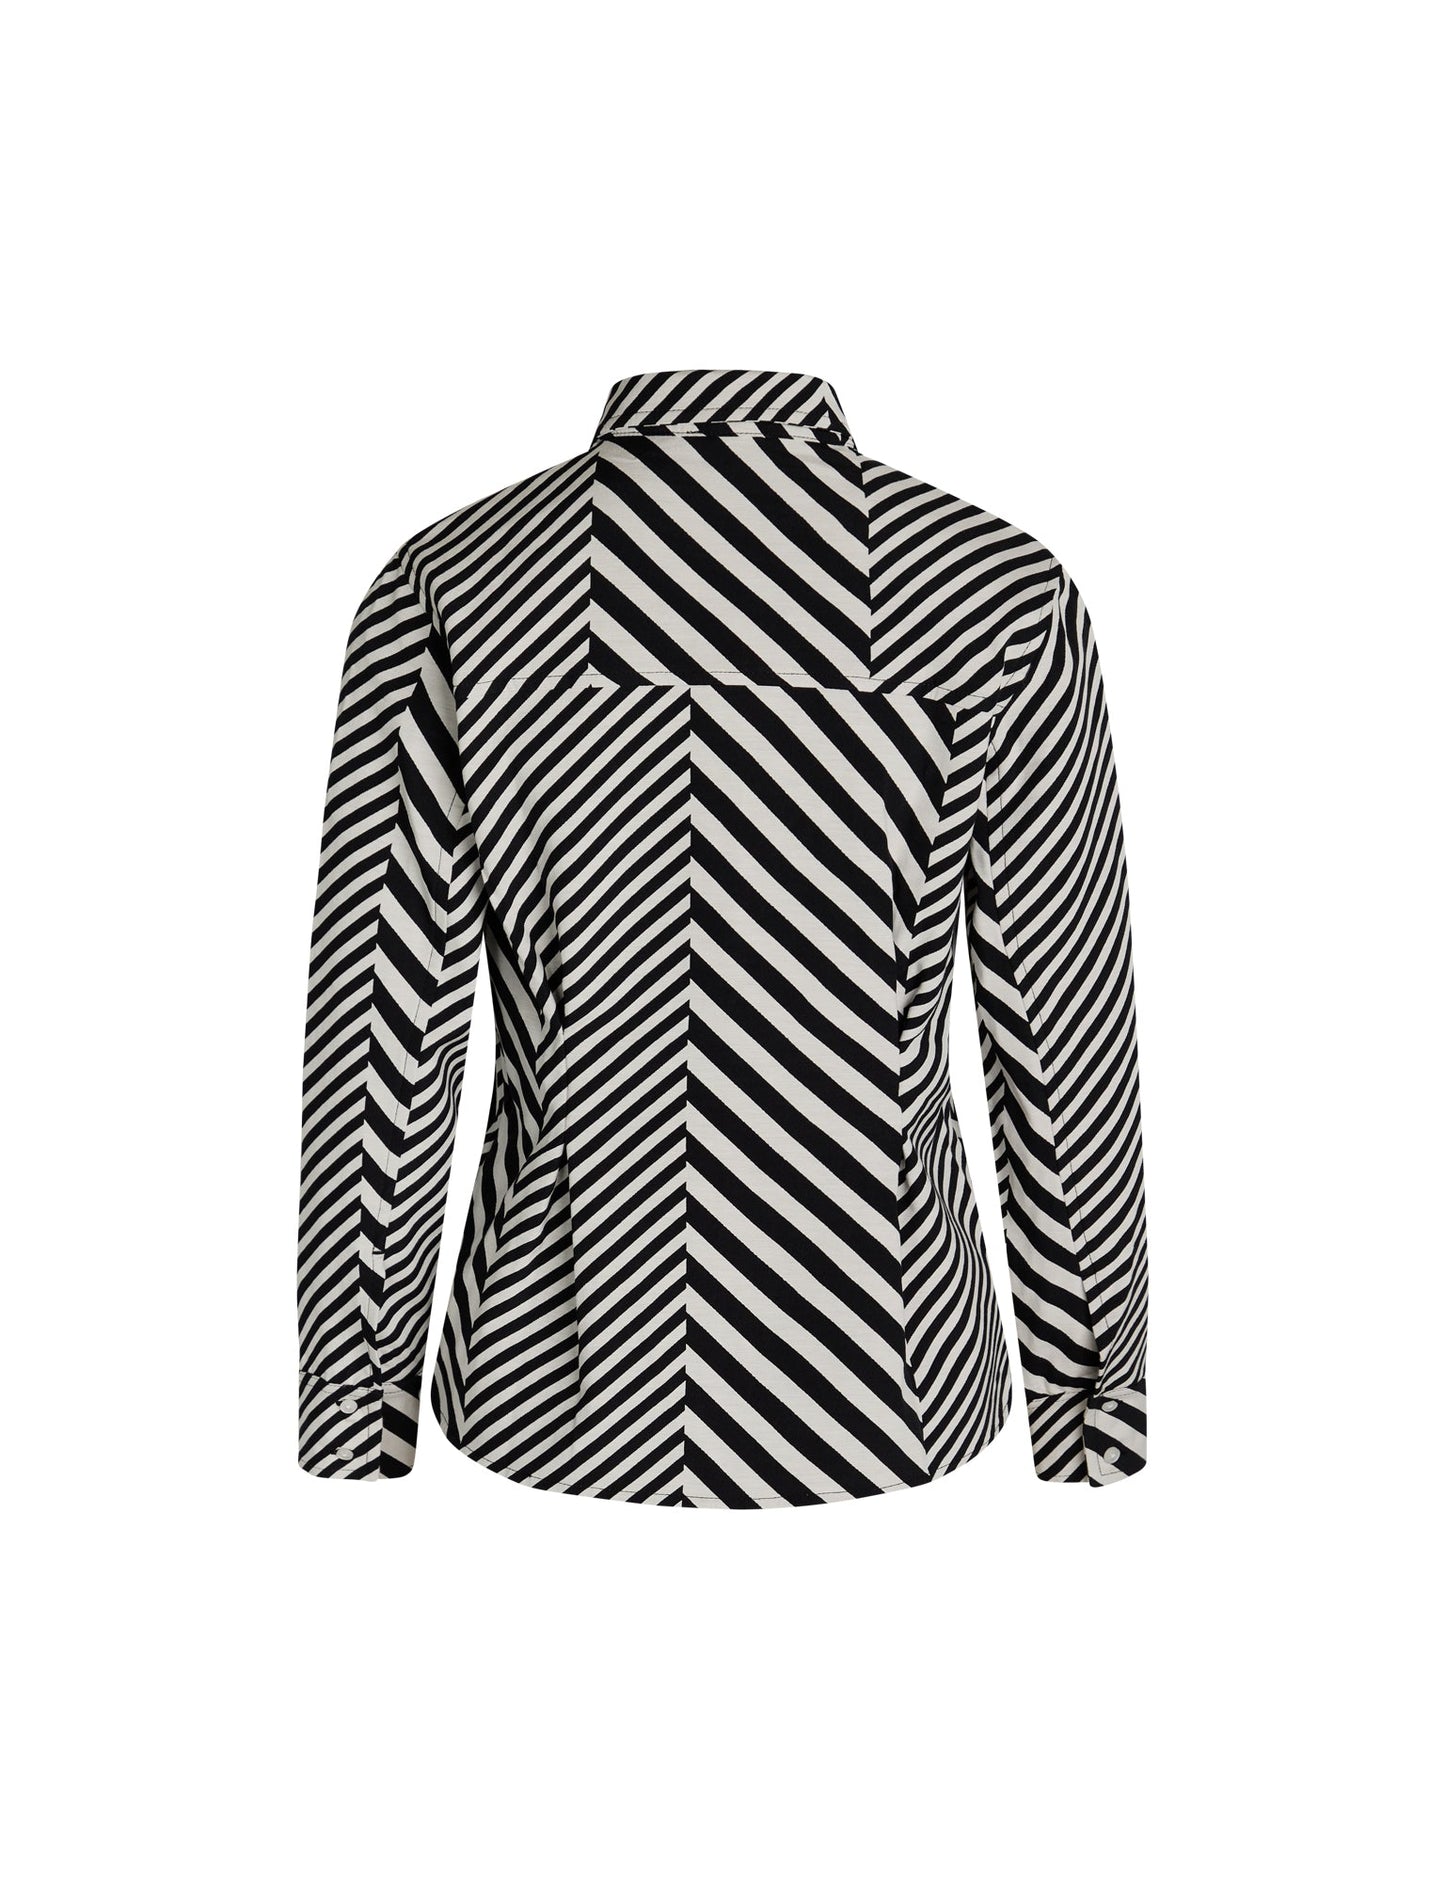 Mix Stripe Nollie Shirt, Black/Cloud Dancer